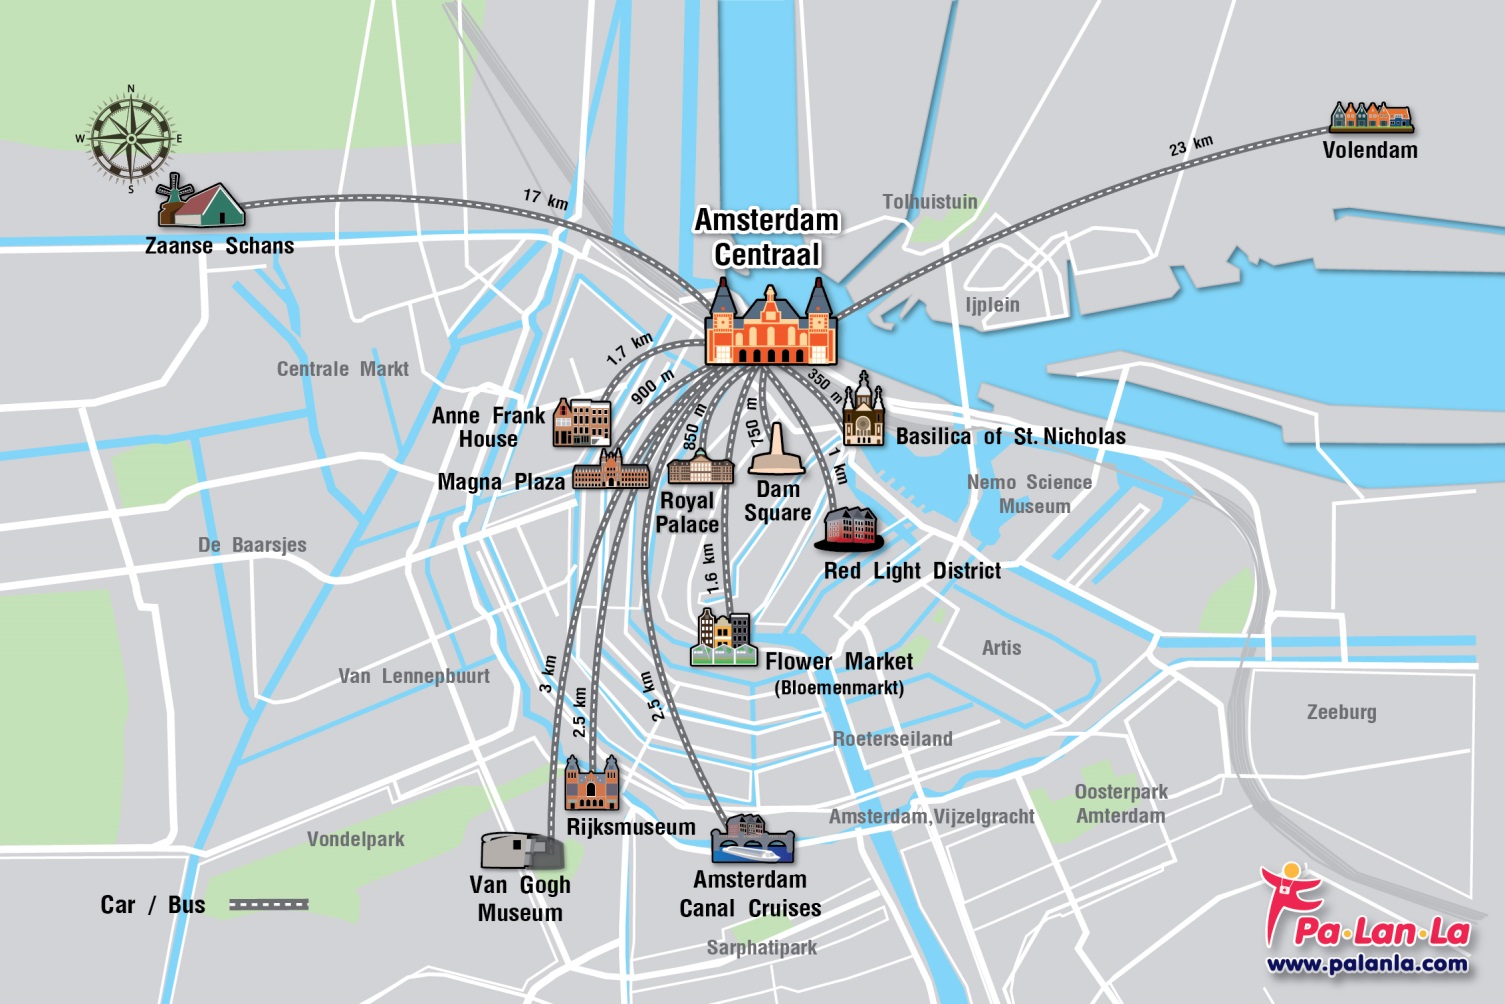 Top 13 Travel Destinations in Amsterdam